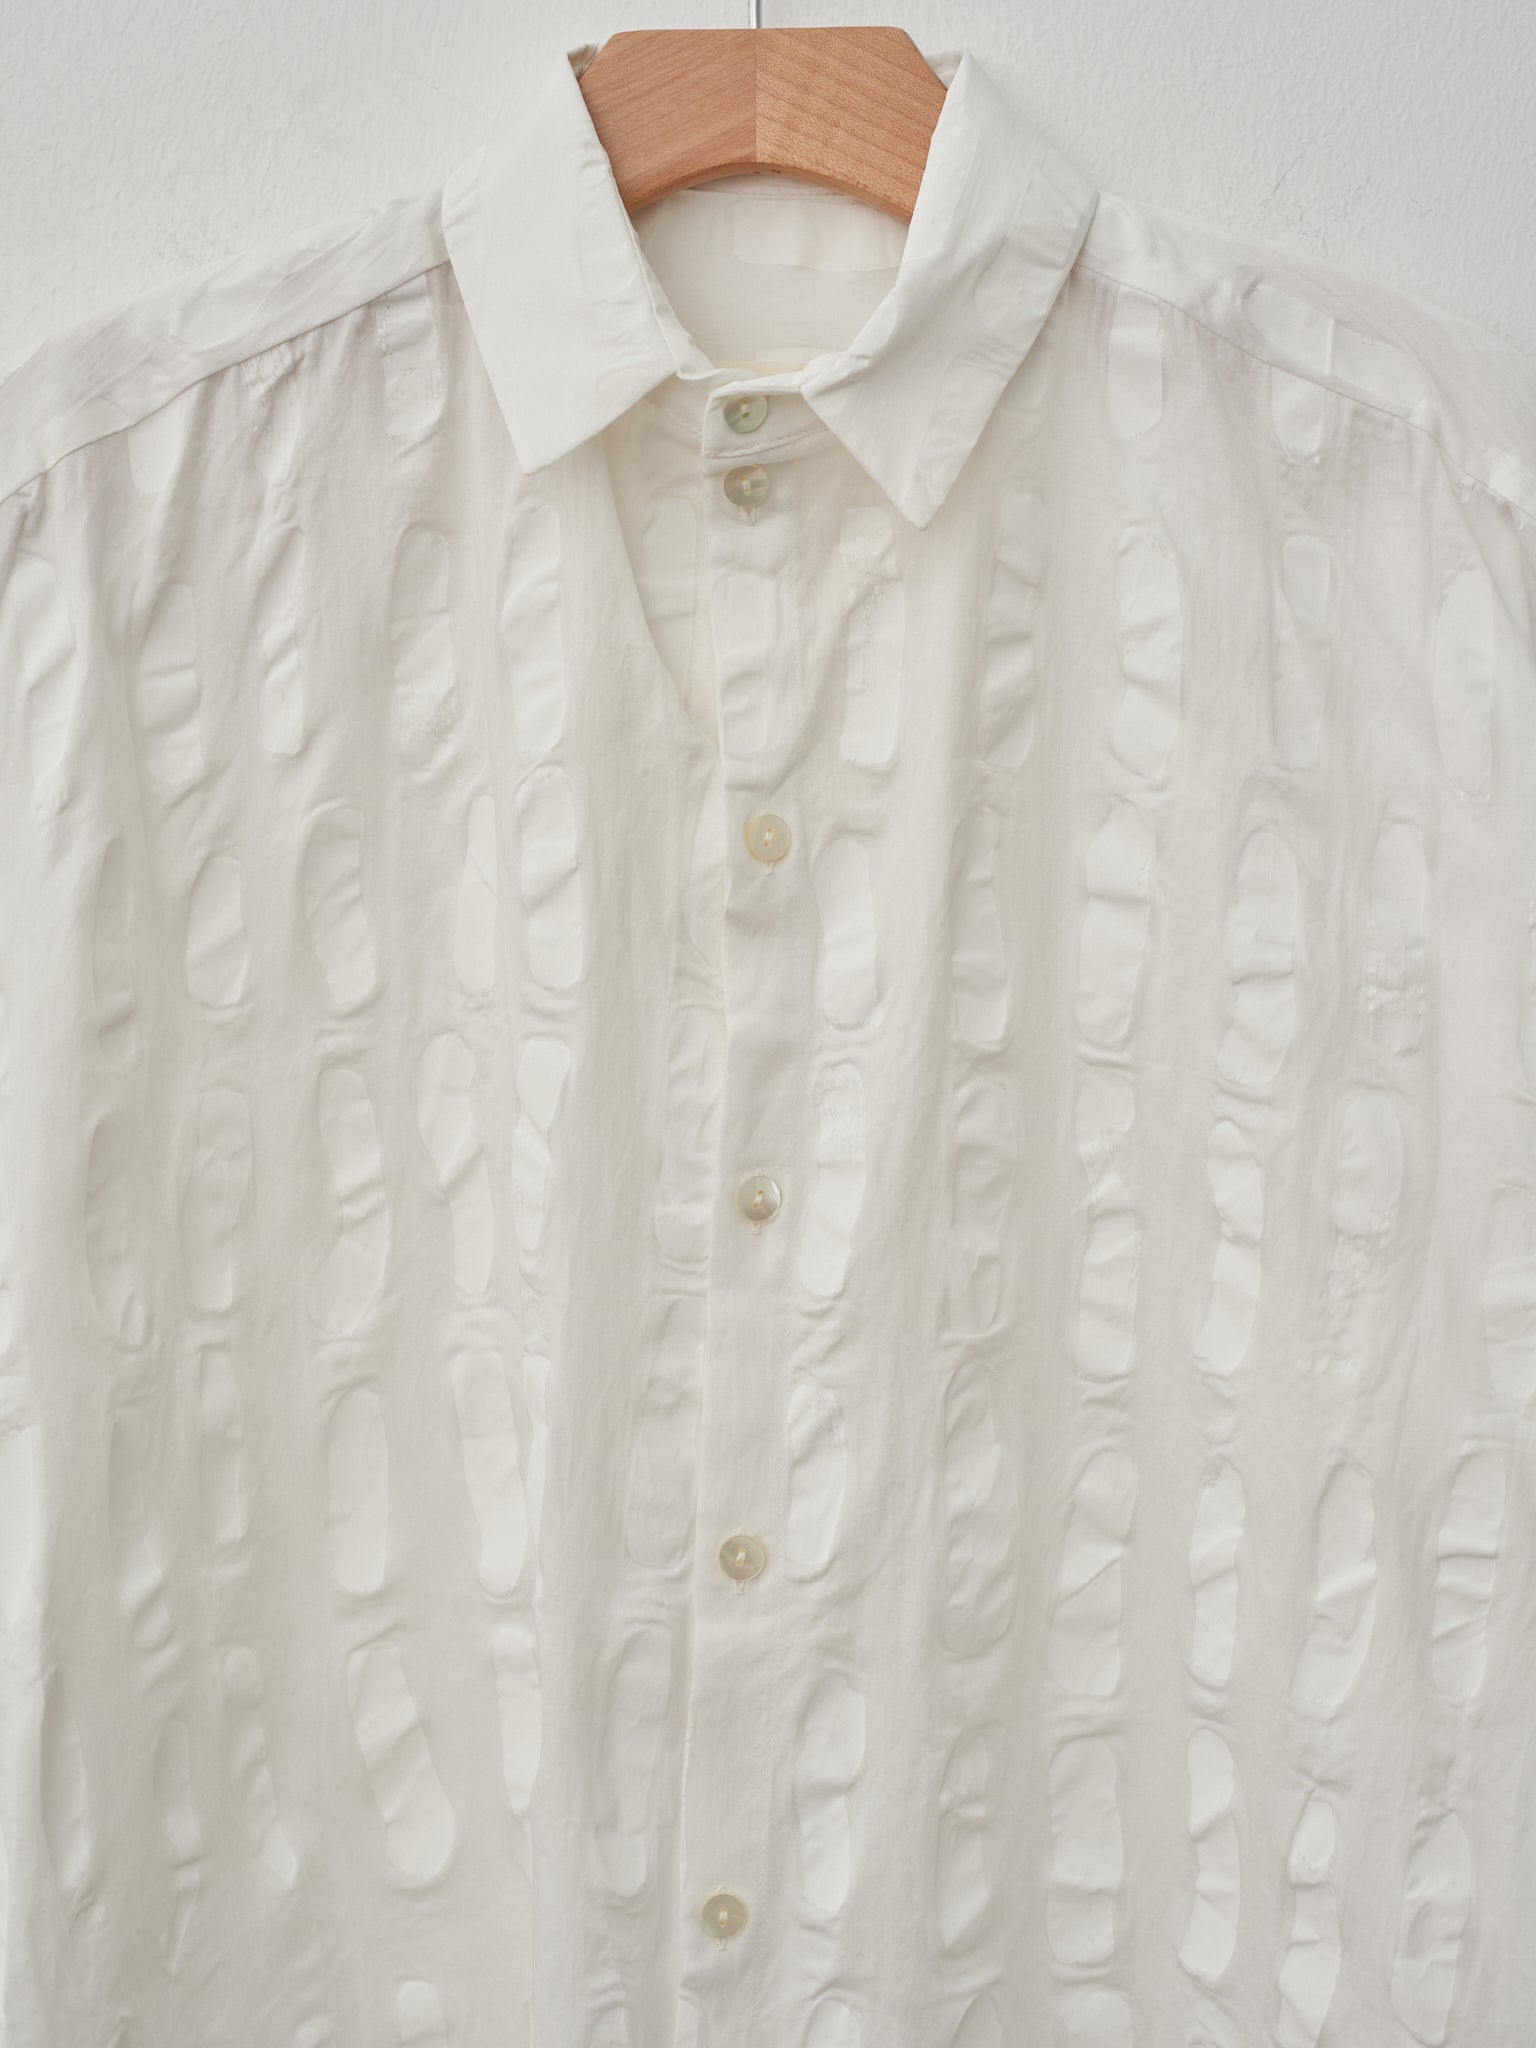 Namu Shop - Toogood The Draughtsman Shirt - Dash Print Voile Chalk